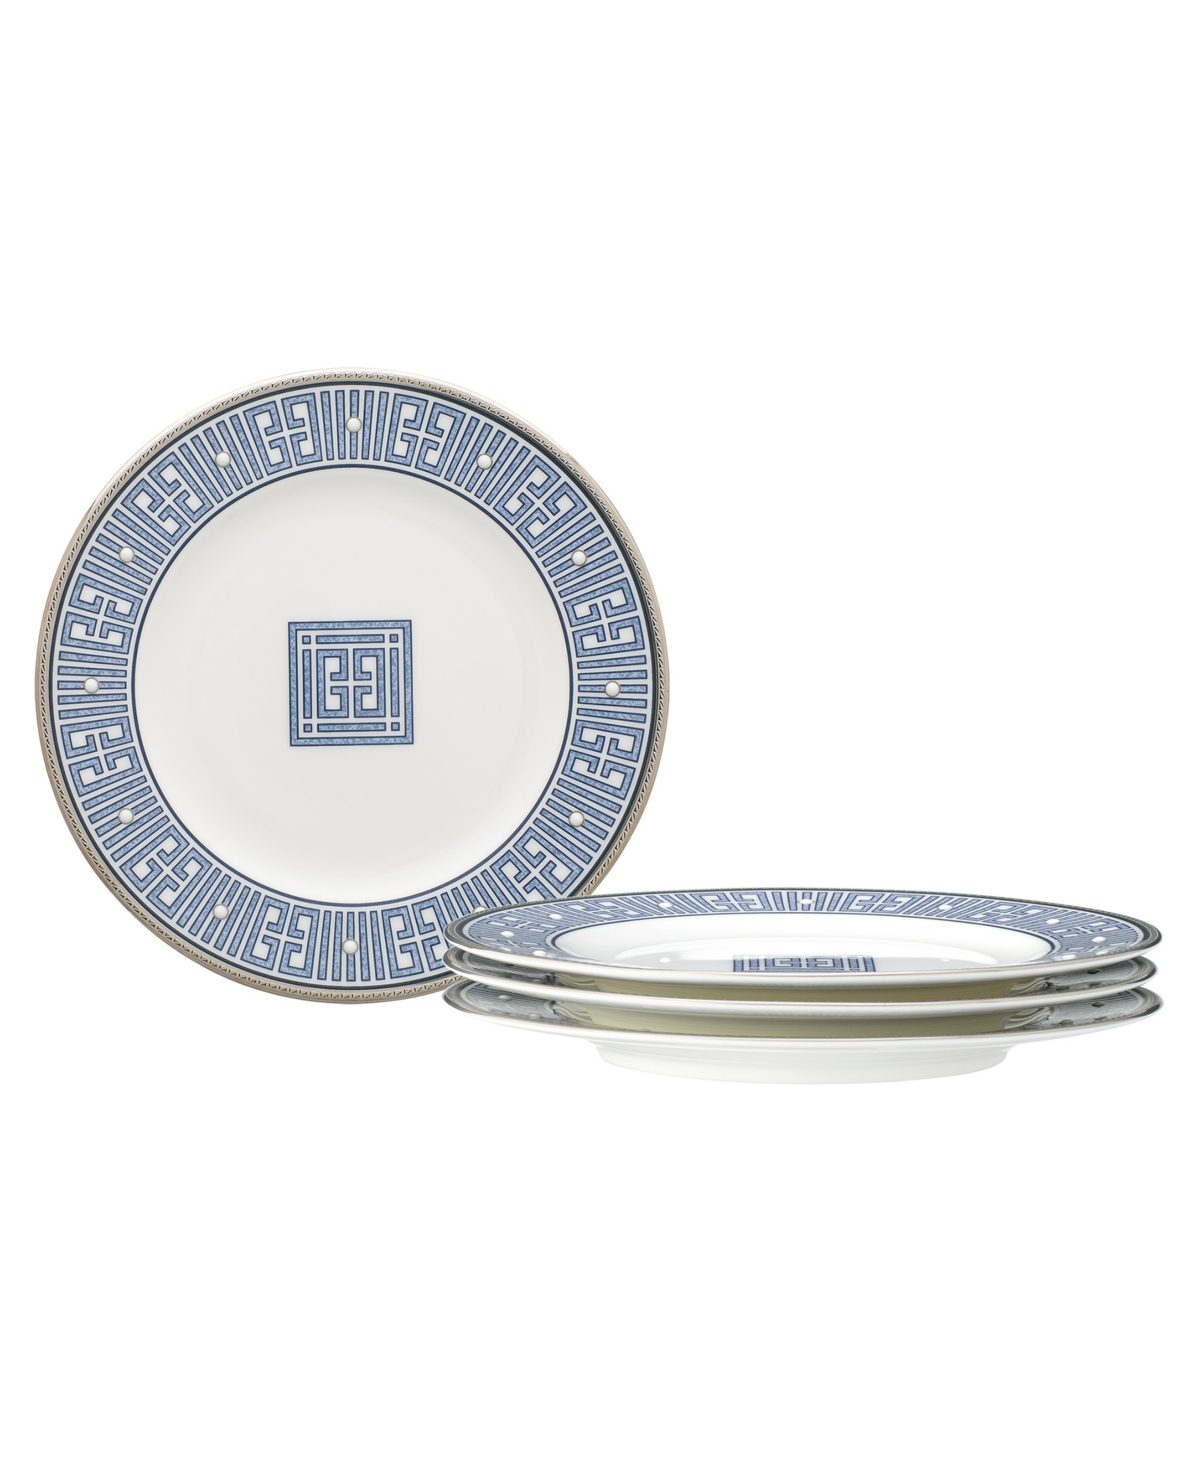 Noritake Infinity 4 Piece Bread Butter/appetizer Plate Set, Service For 4 In Blue